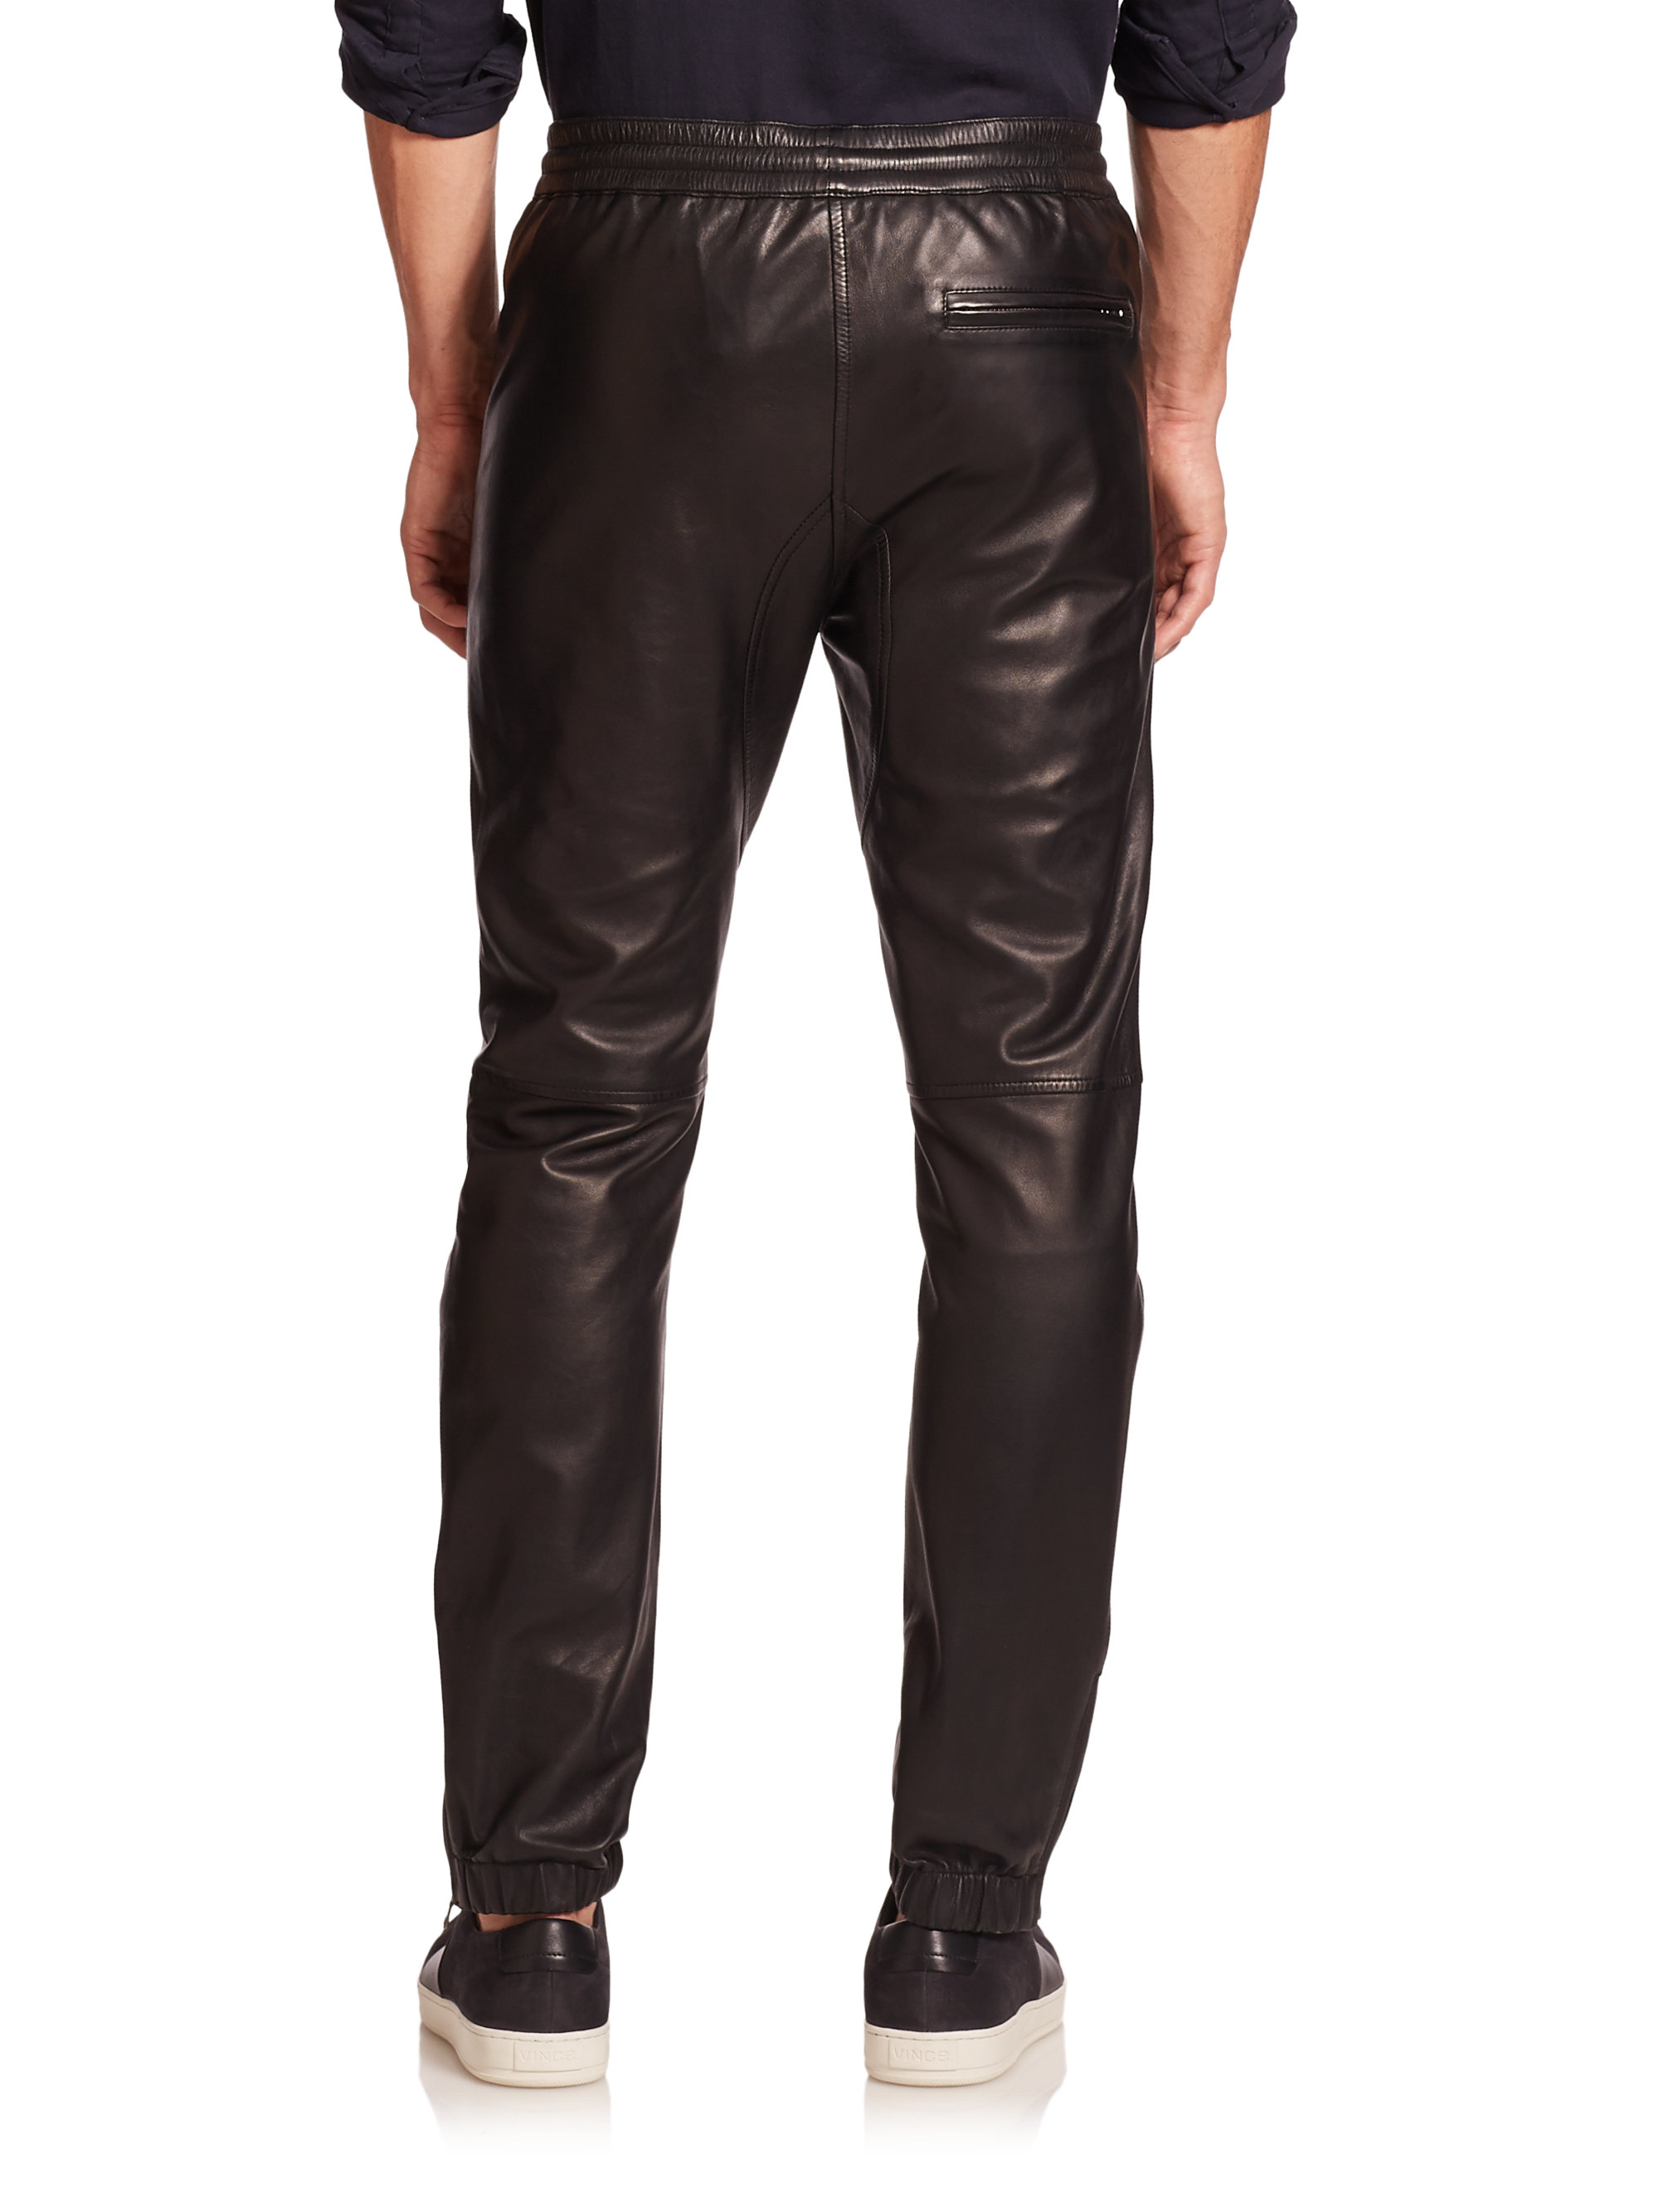 Lyst - Vince Leather Moto Jogger Pants in Black for Men